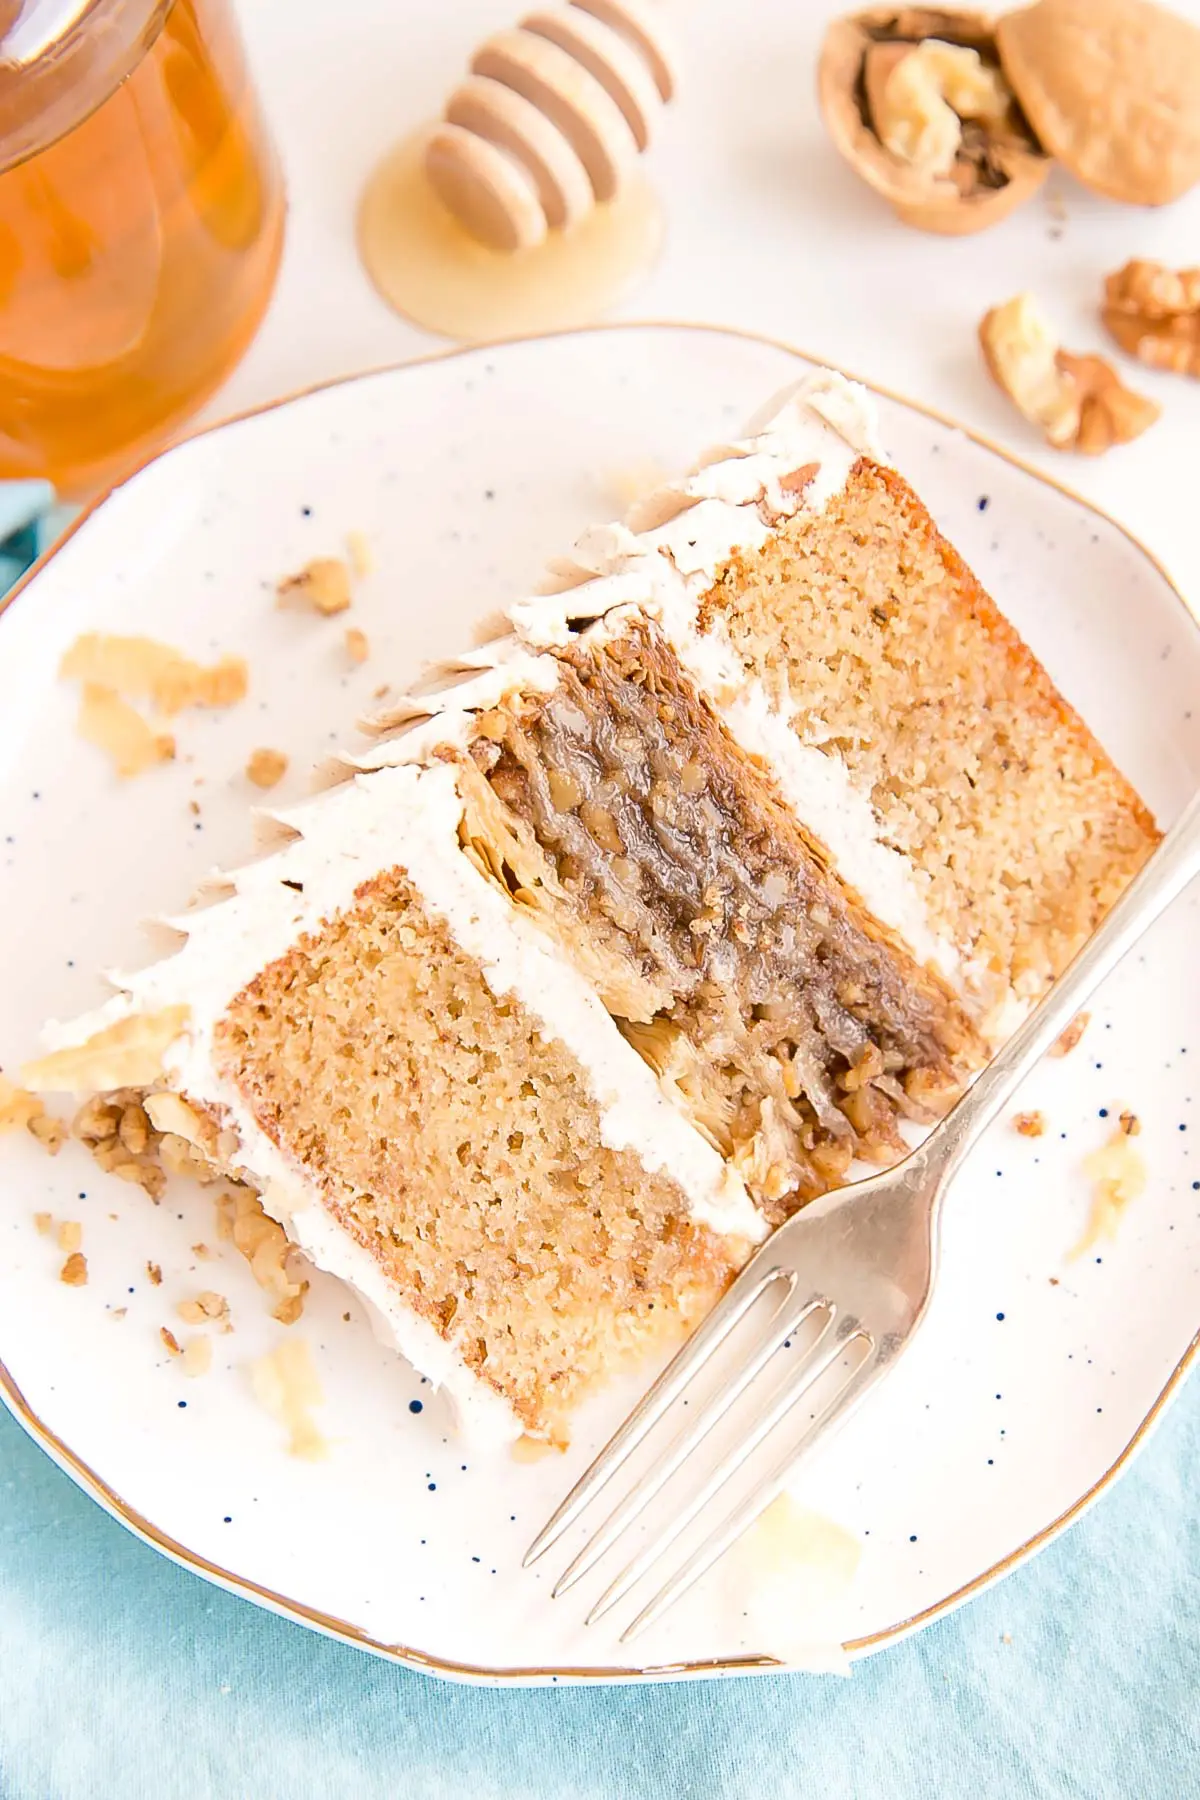 A slice of baklava cake on a plate